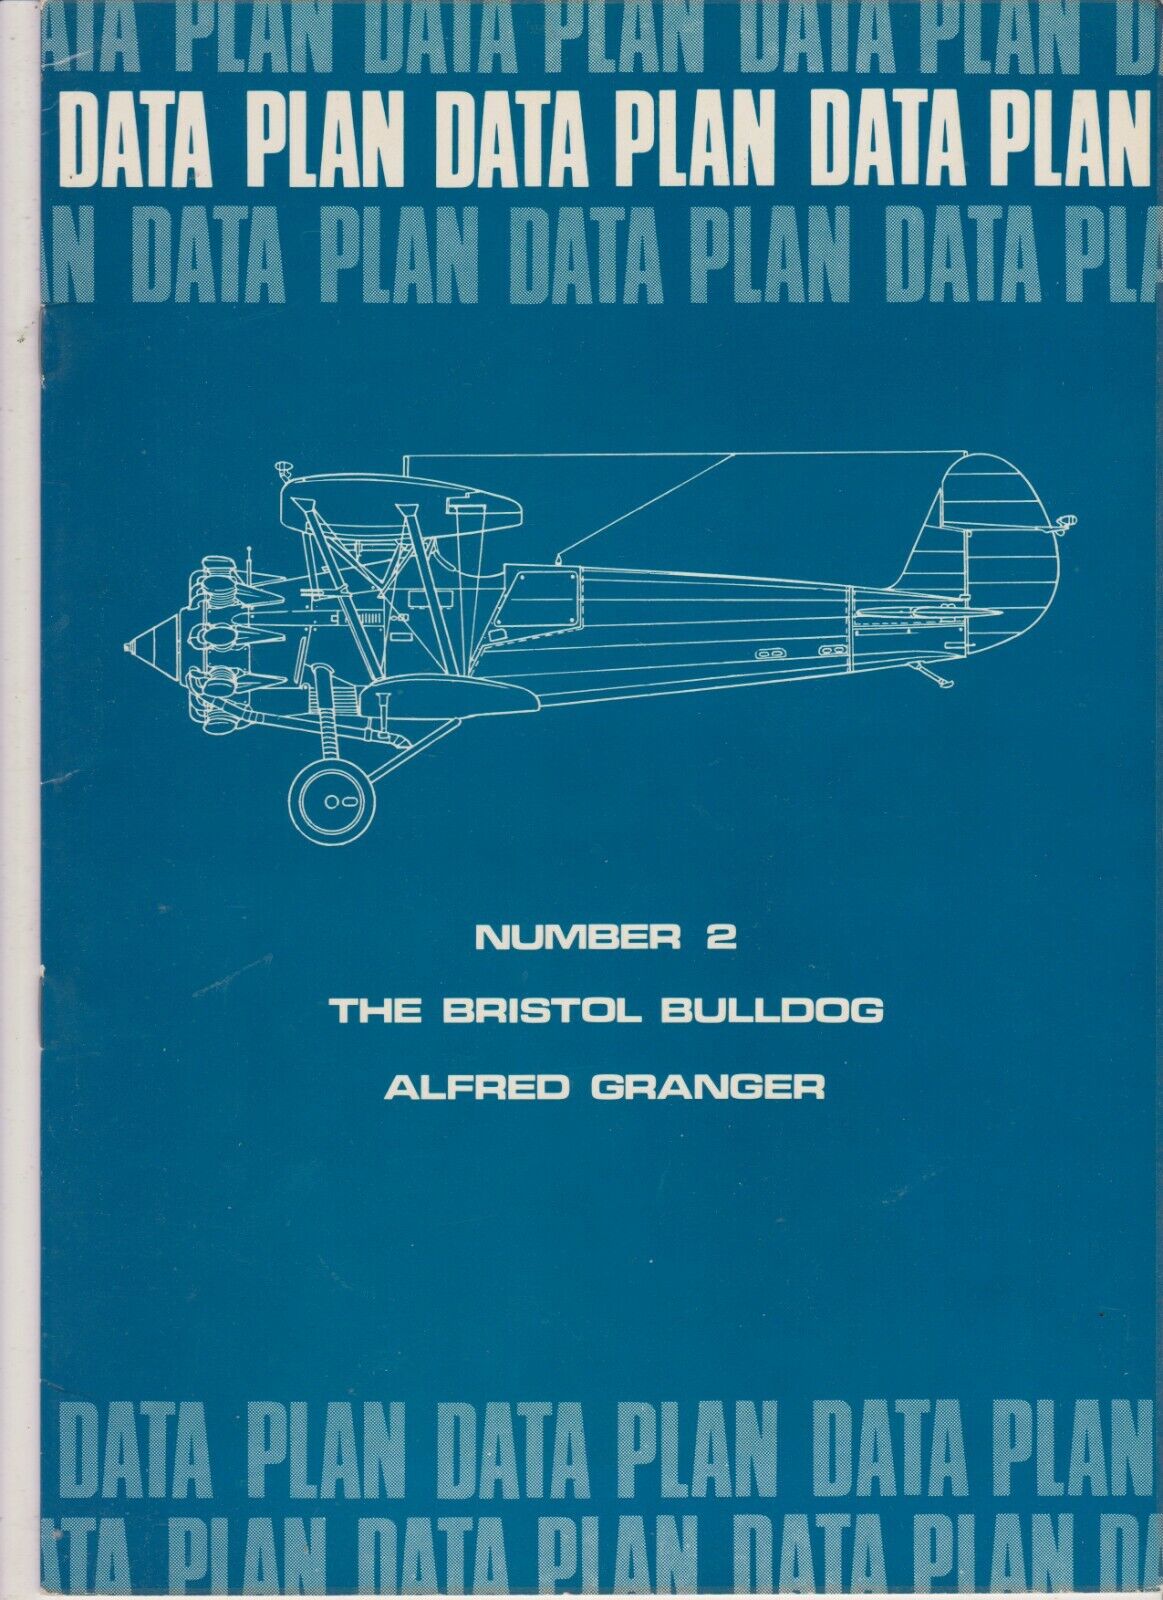 BRISTOL BULLDOG DATA PLAN AIRPLANE BOOK